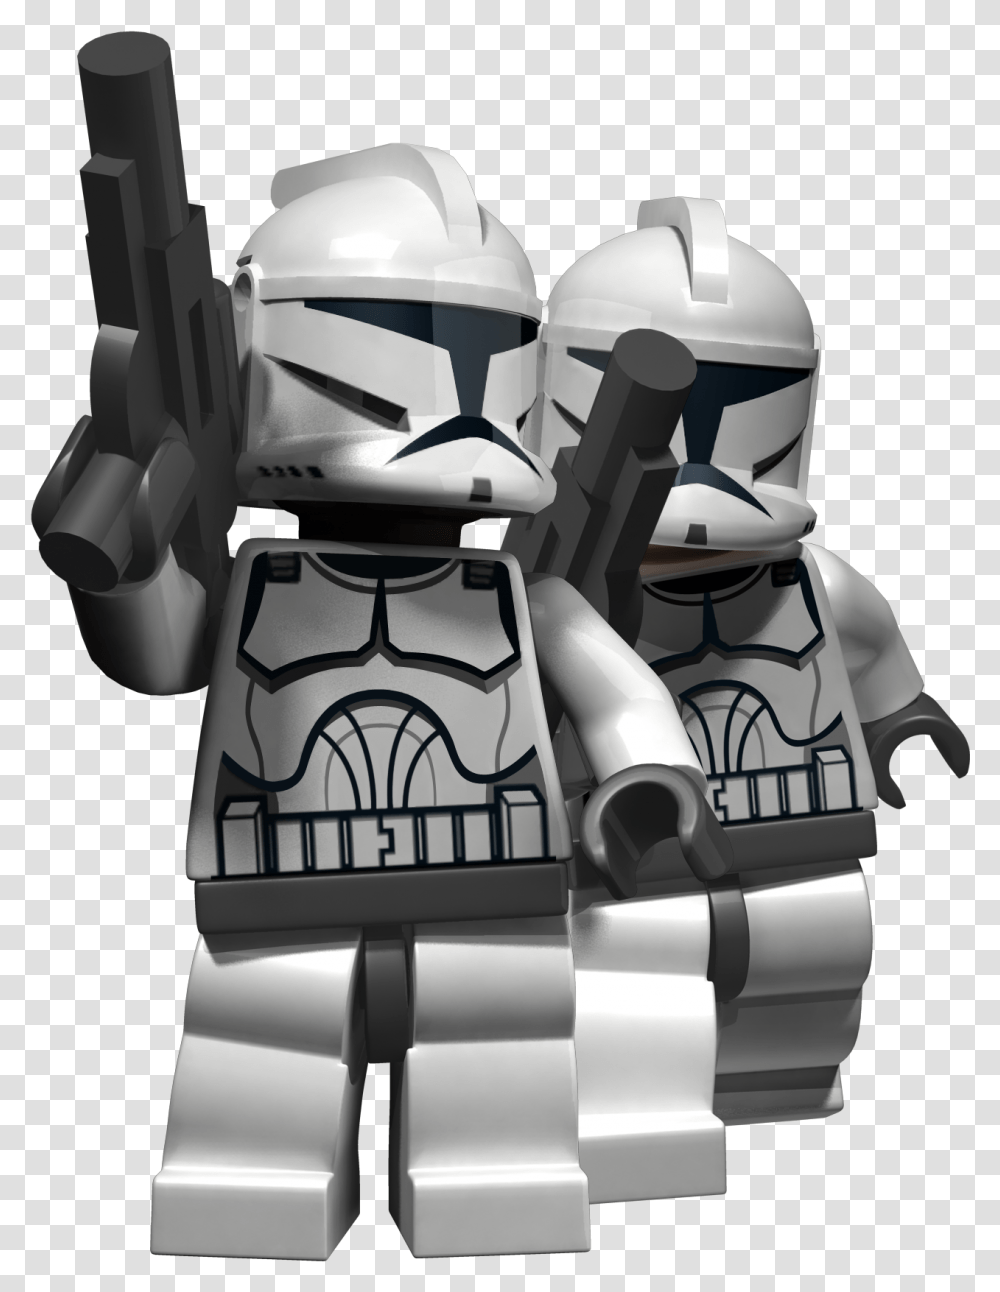 Star Wars Lego Star Wars Game Clone Trooper, Toy, Robot, Helmet, Clothing Transparent Png